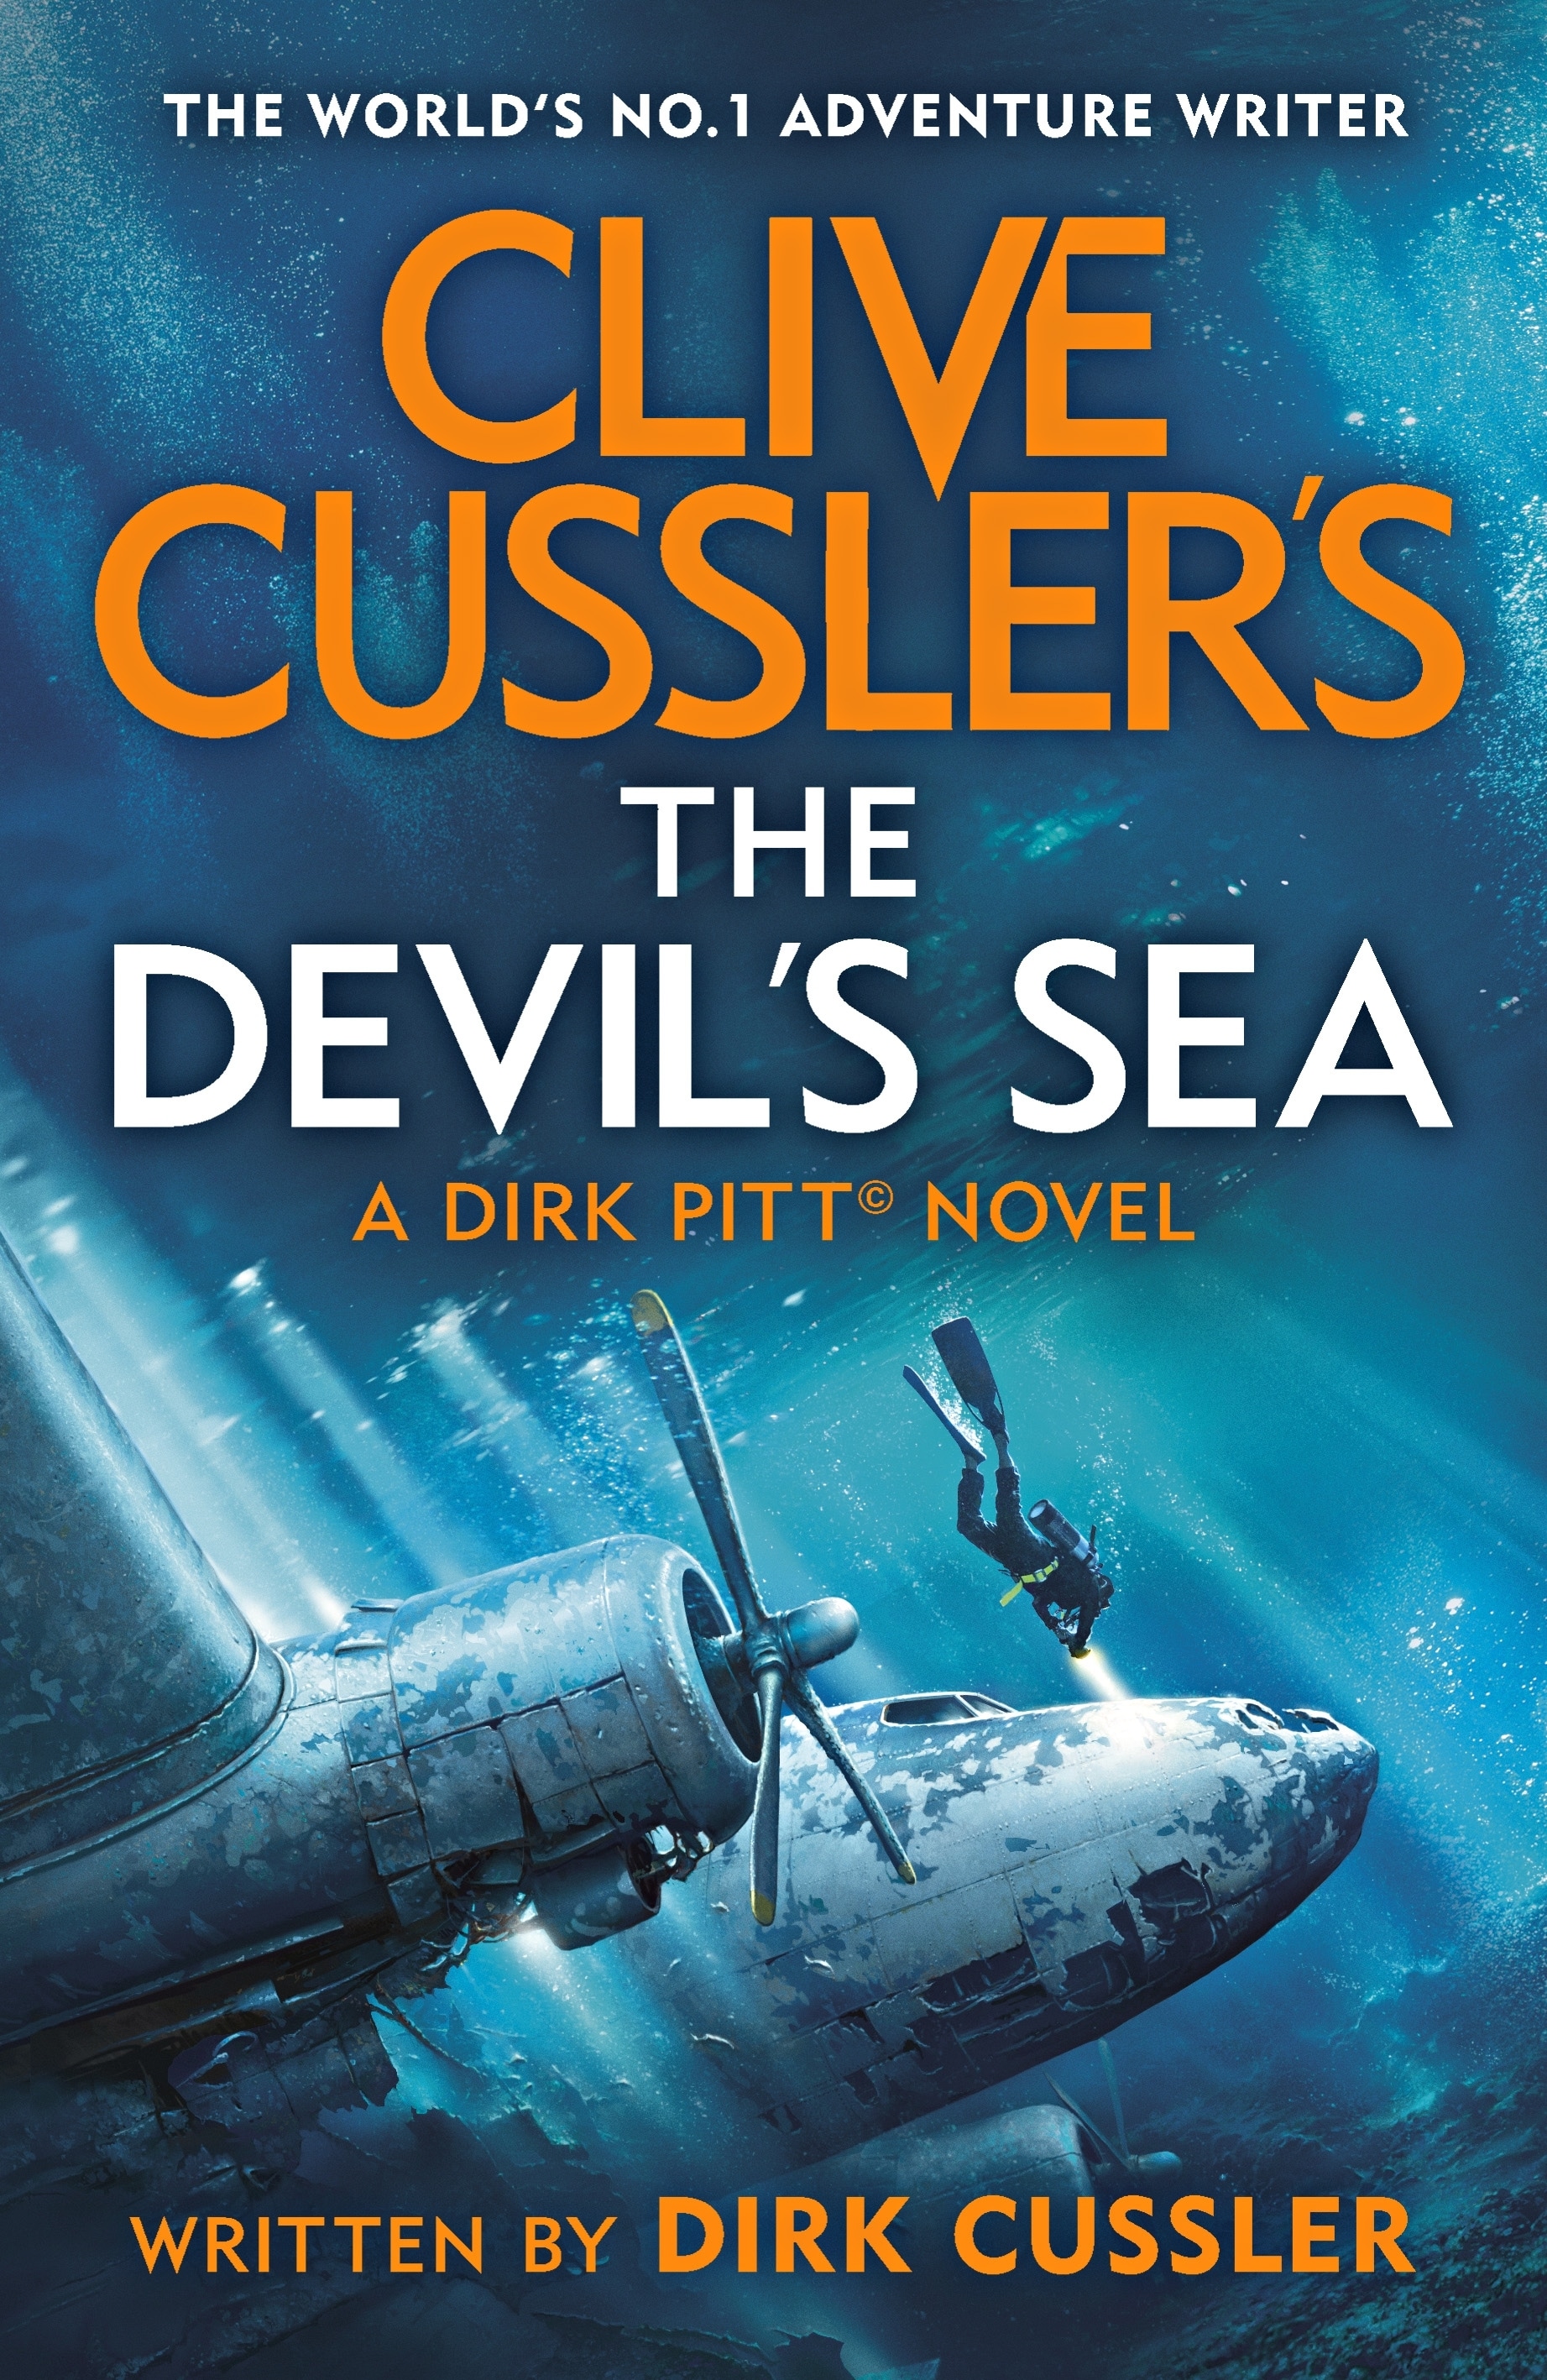 Book “Clive Cussler's The Devil's Sea” by Dirk Cussler — November 10, 2022